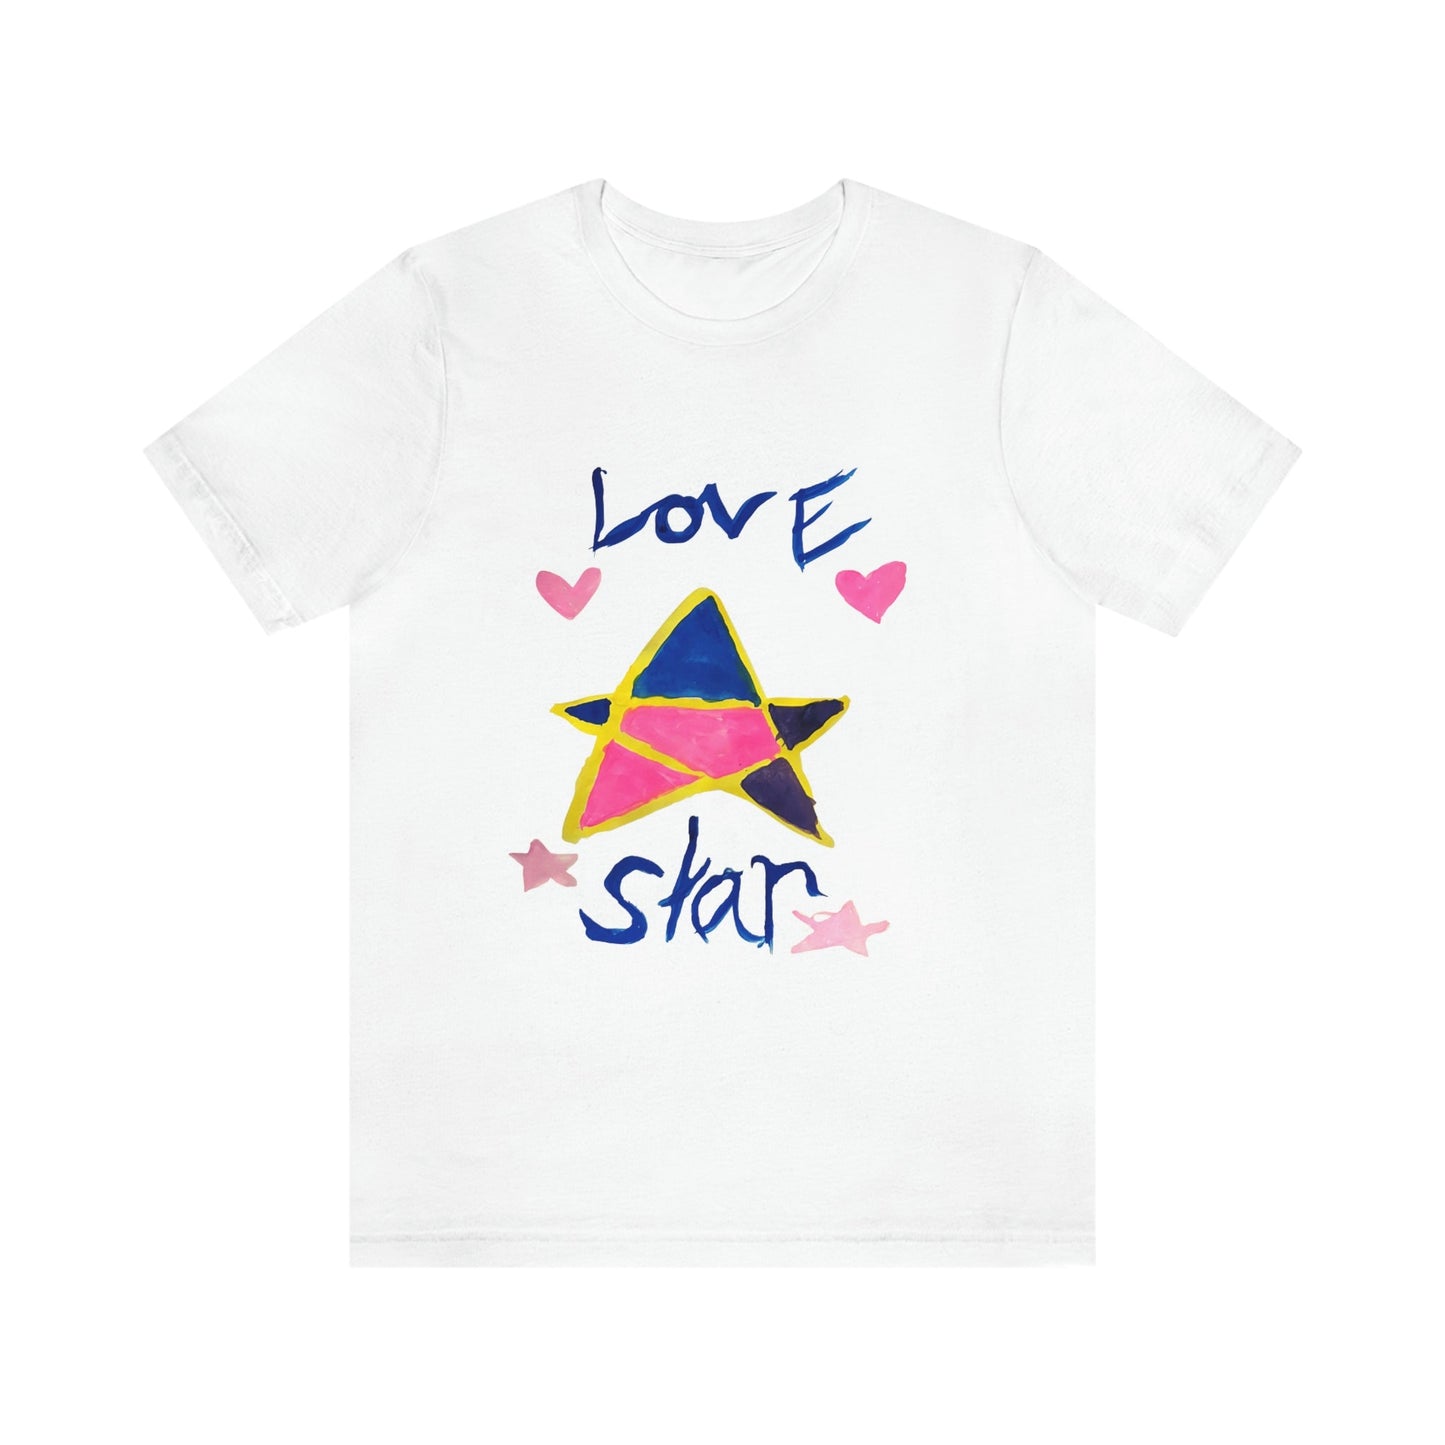 Love Star Graphic T-Shirt-T-Shirt-White-S-mysticalcherry